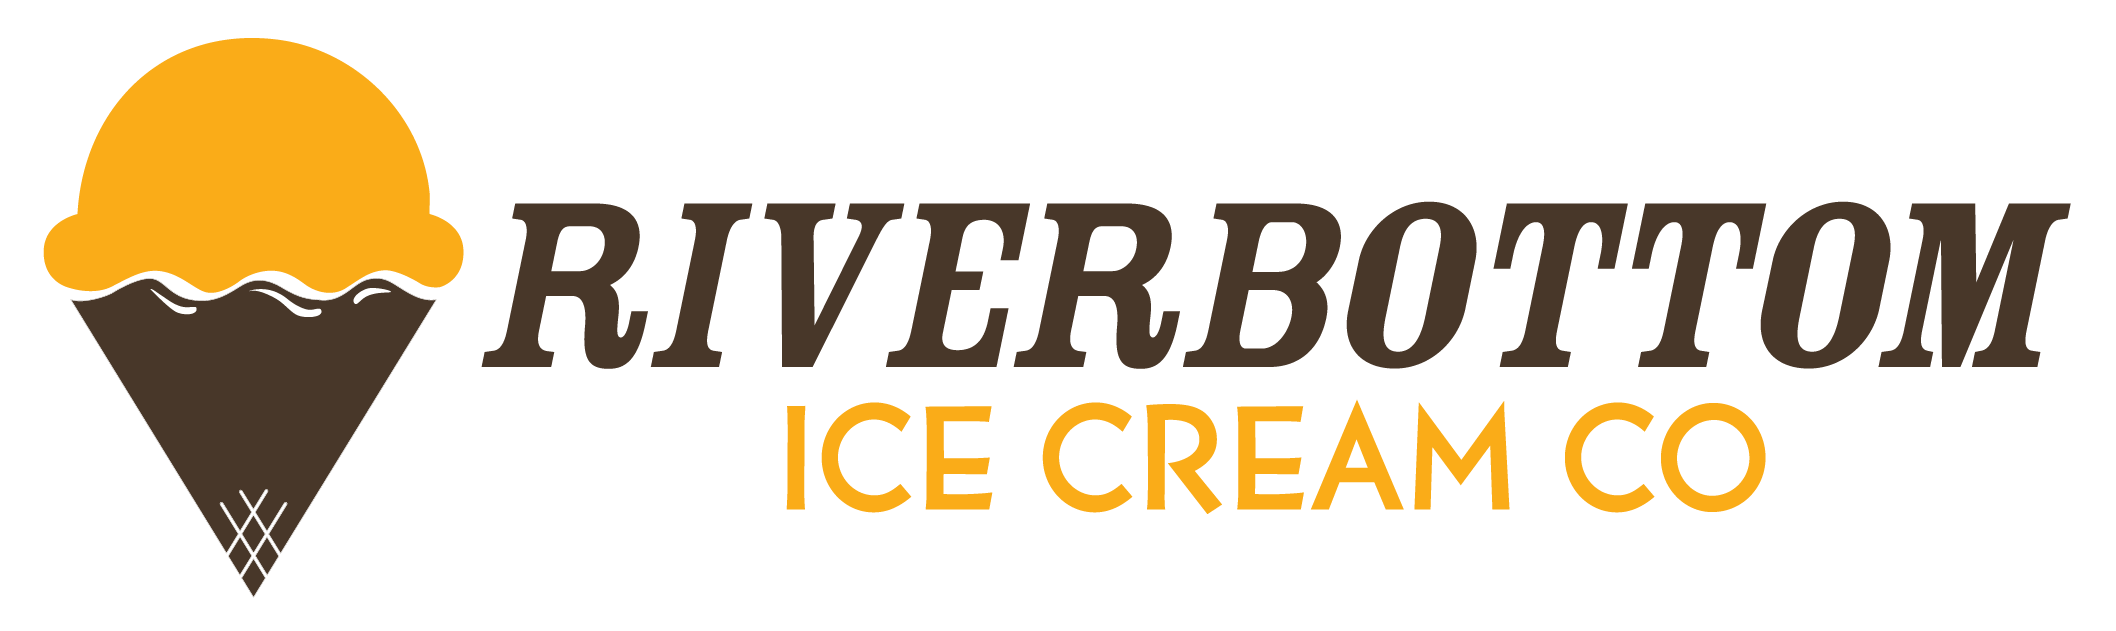 Riverbottom Ice Cream Co.